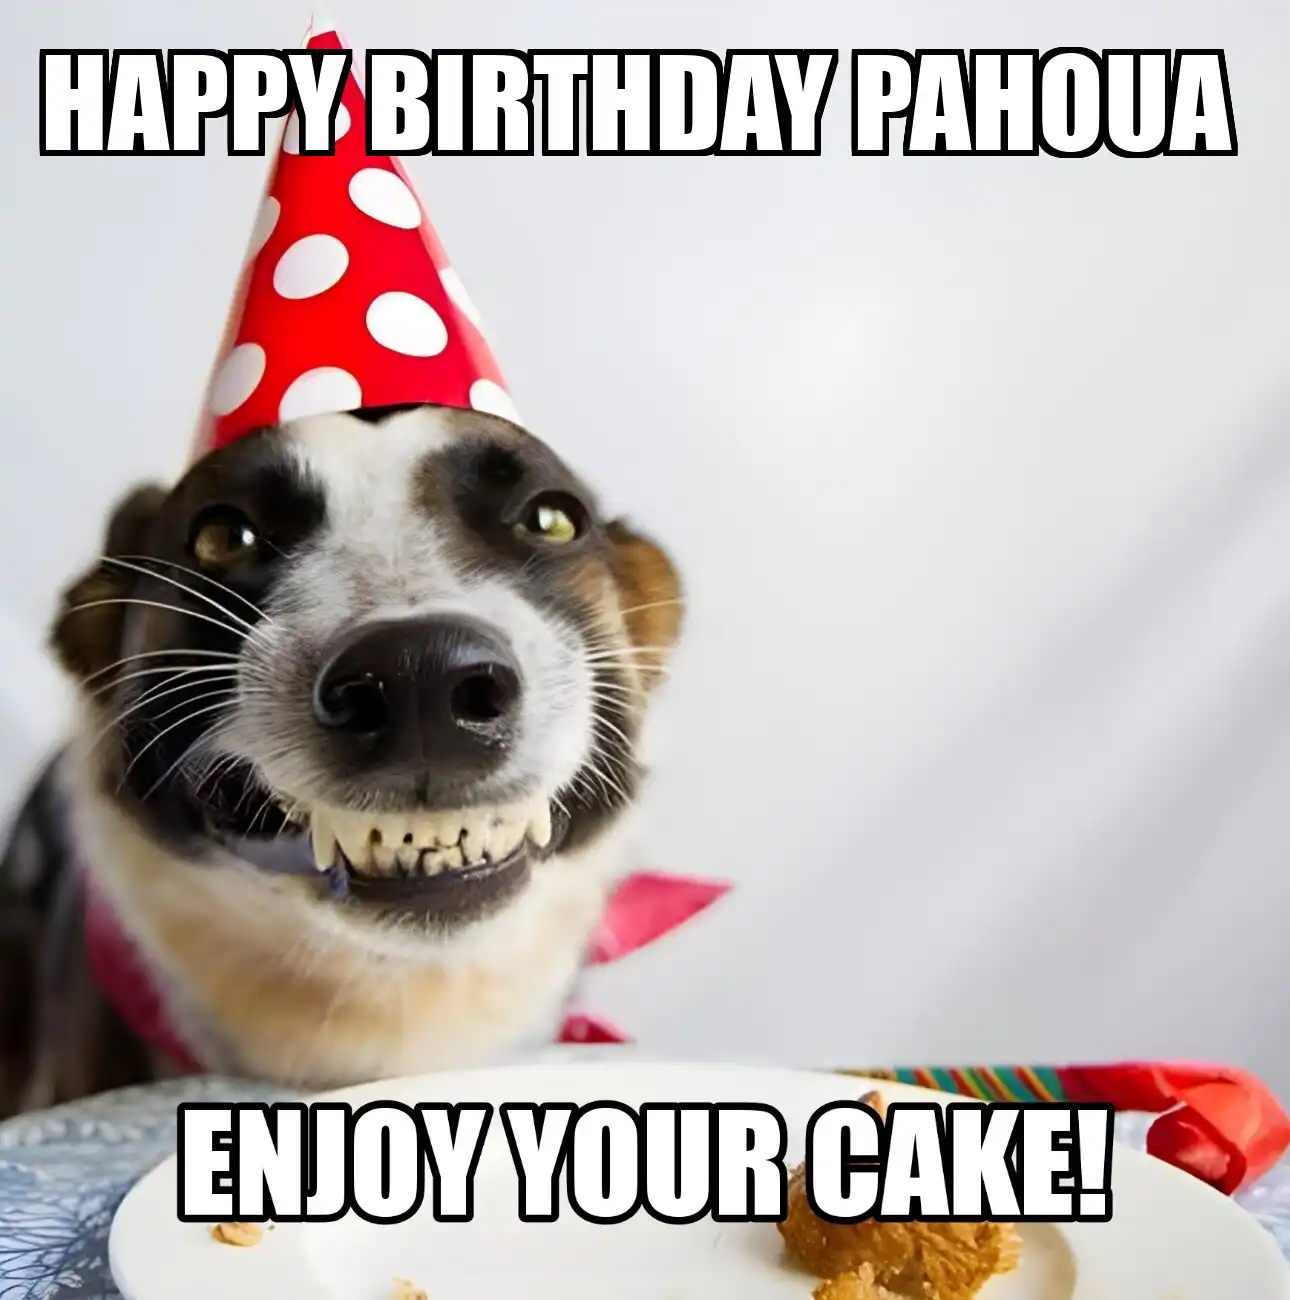 Happy Birthday Pahoua Enjoy Your Cake Dog Meme